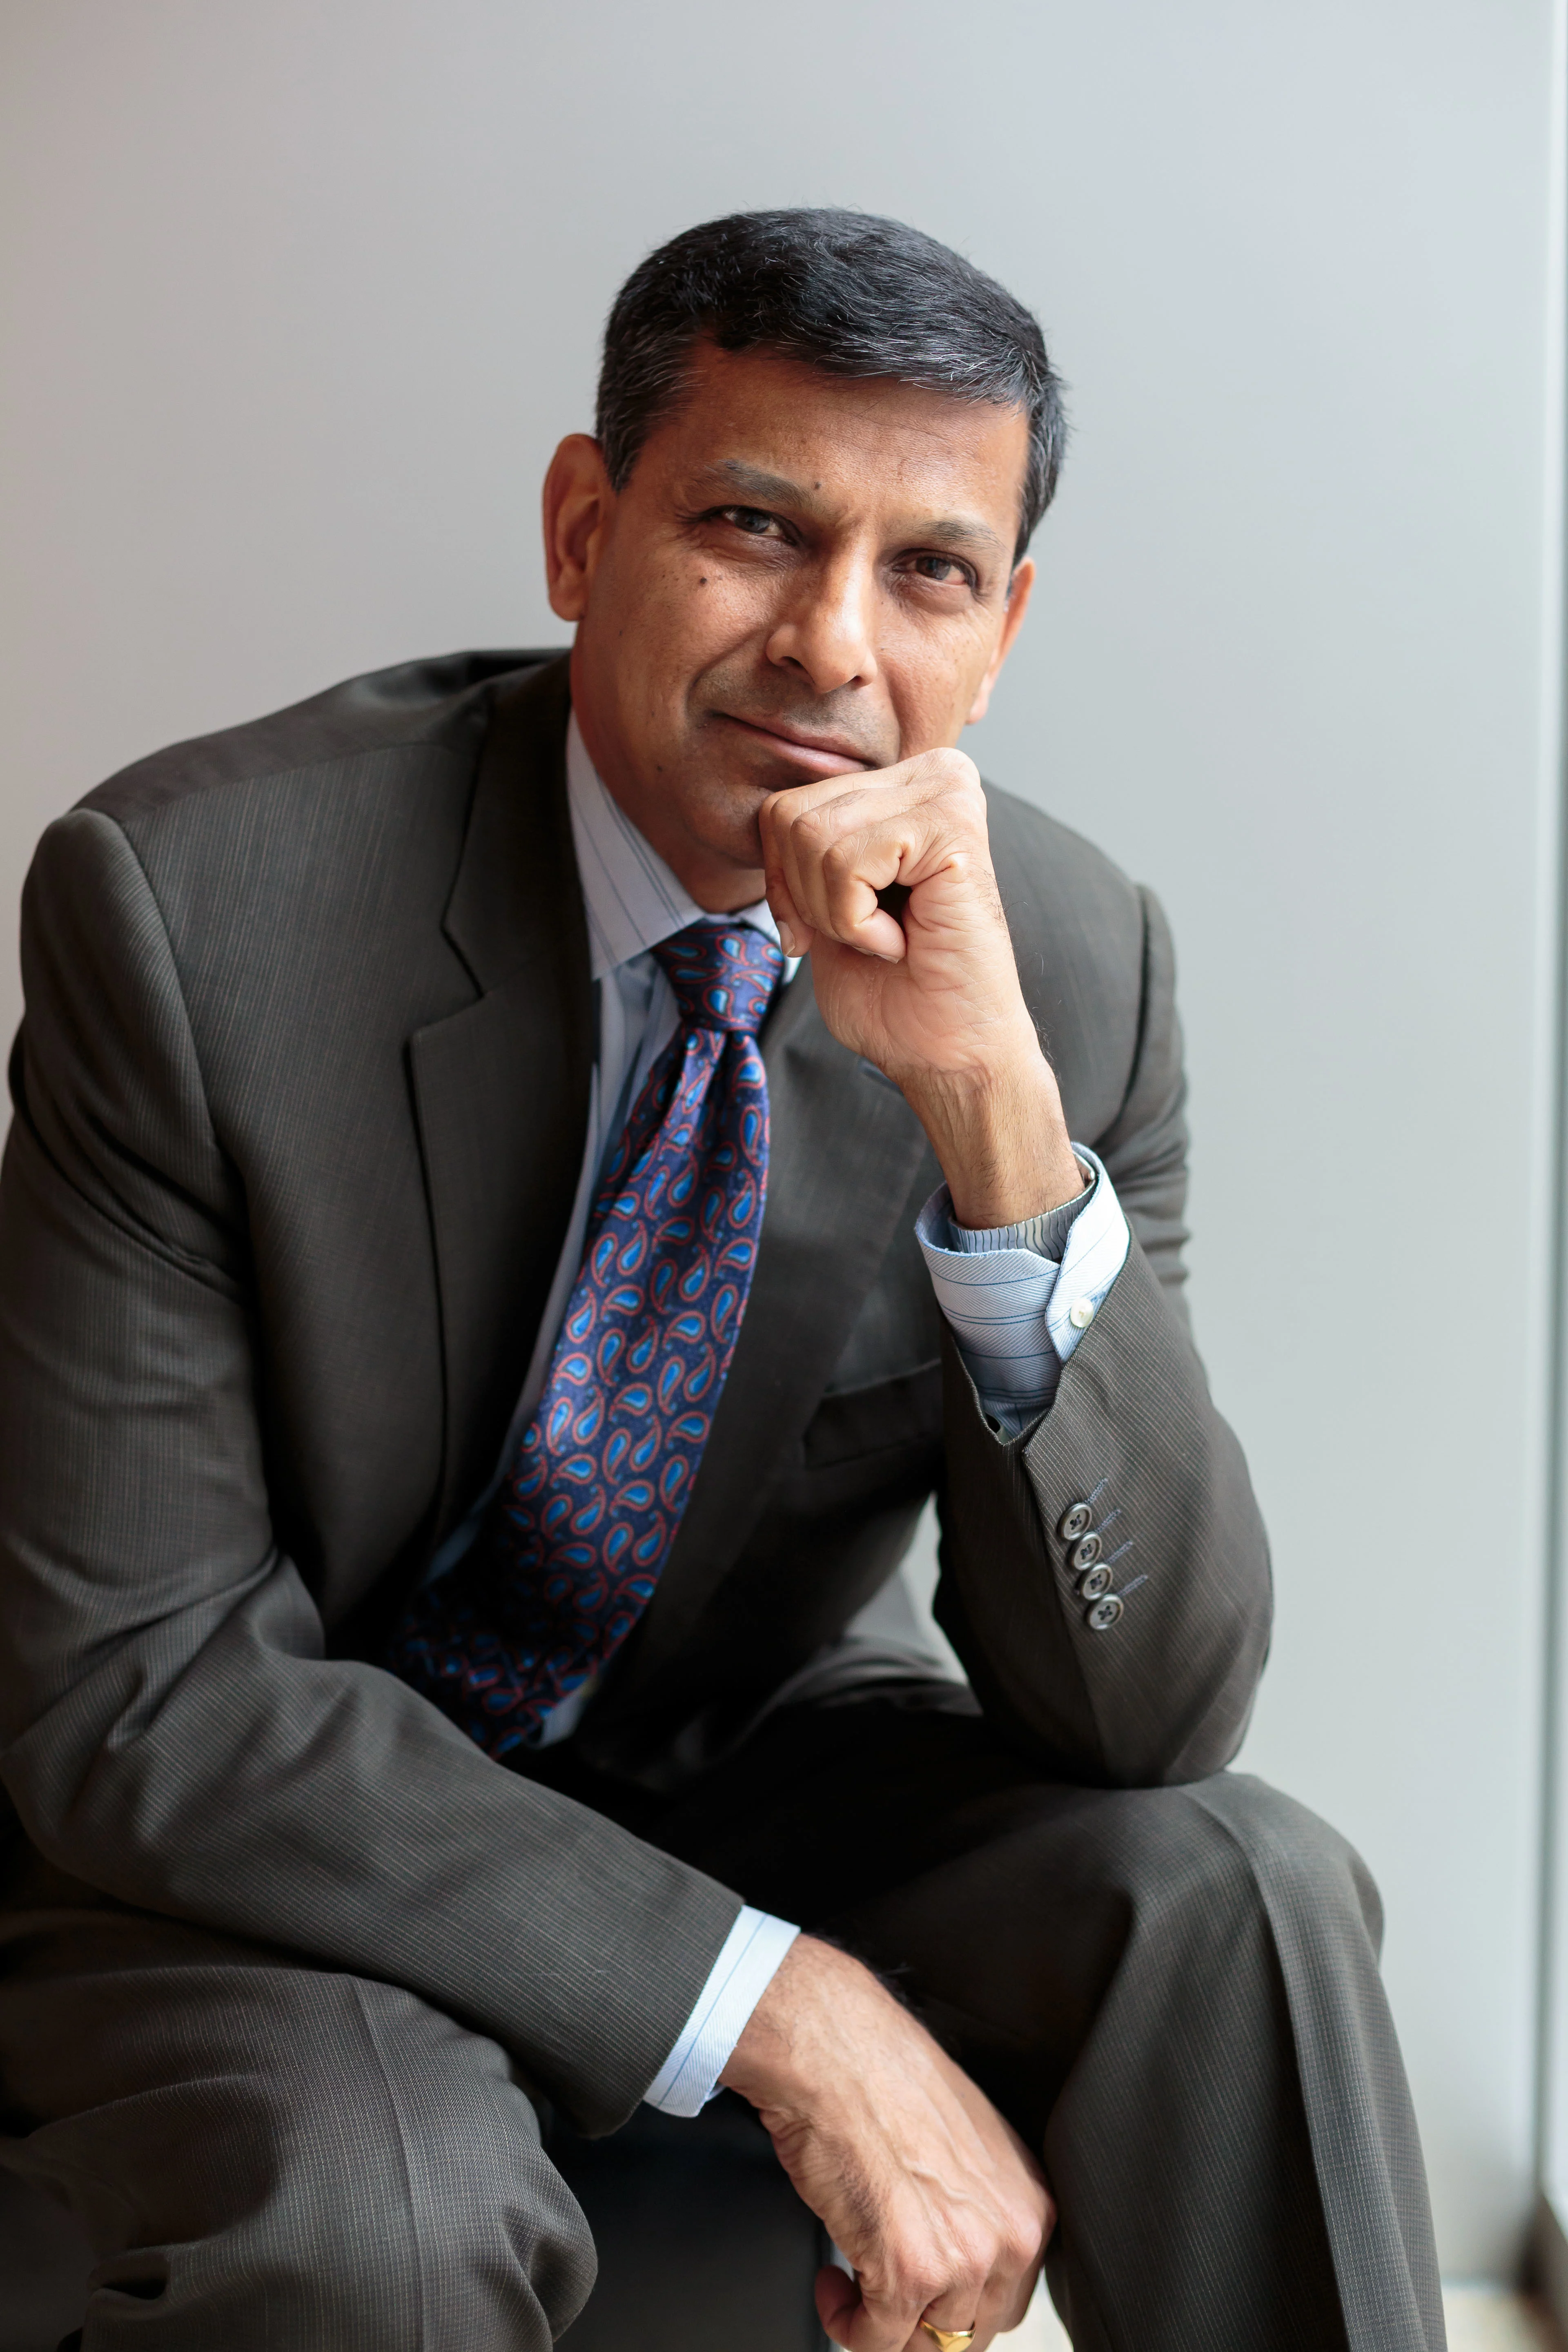 RAGHURAM G. RAJAN Distinguished Service Professor of Finance at University of Chicago Booth School of Business.